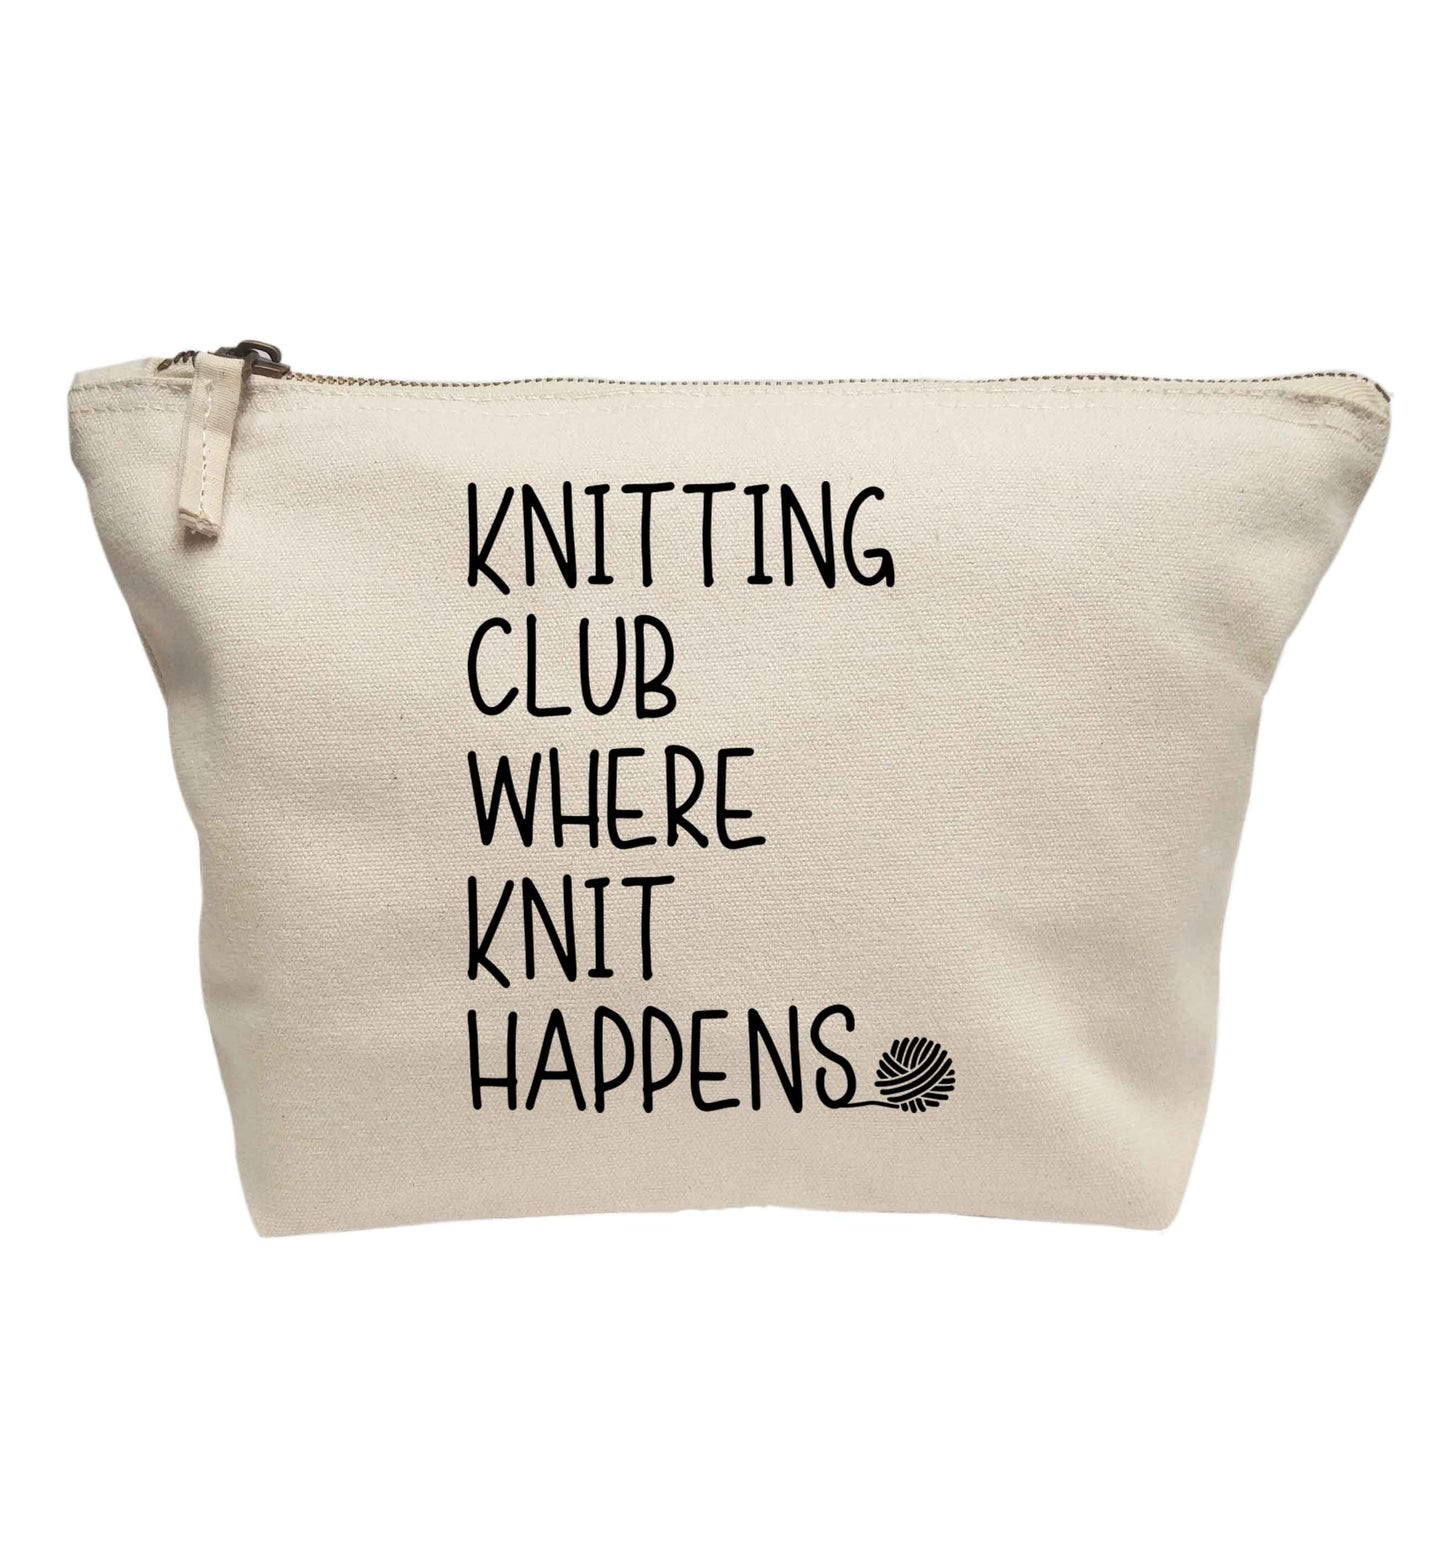 Knitting club where knit happens | Makeup / wash bag